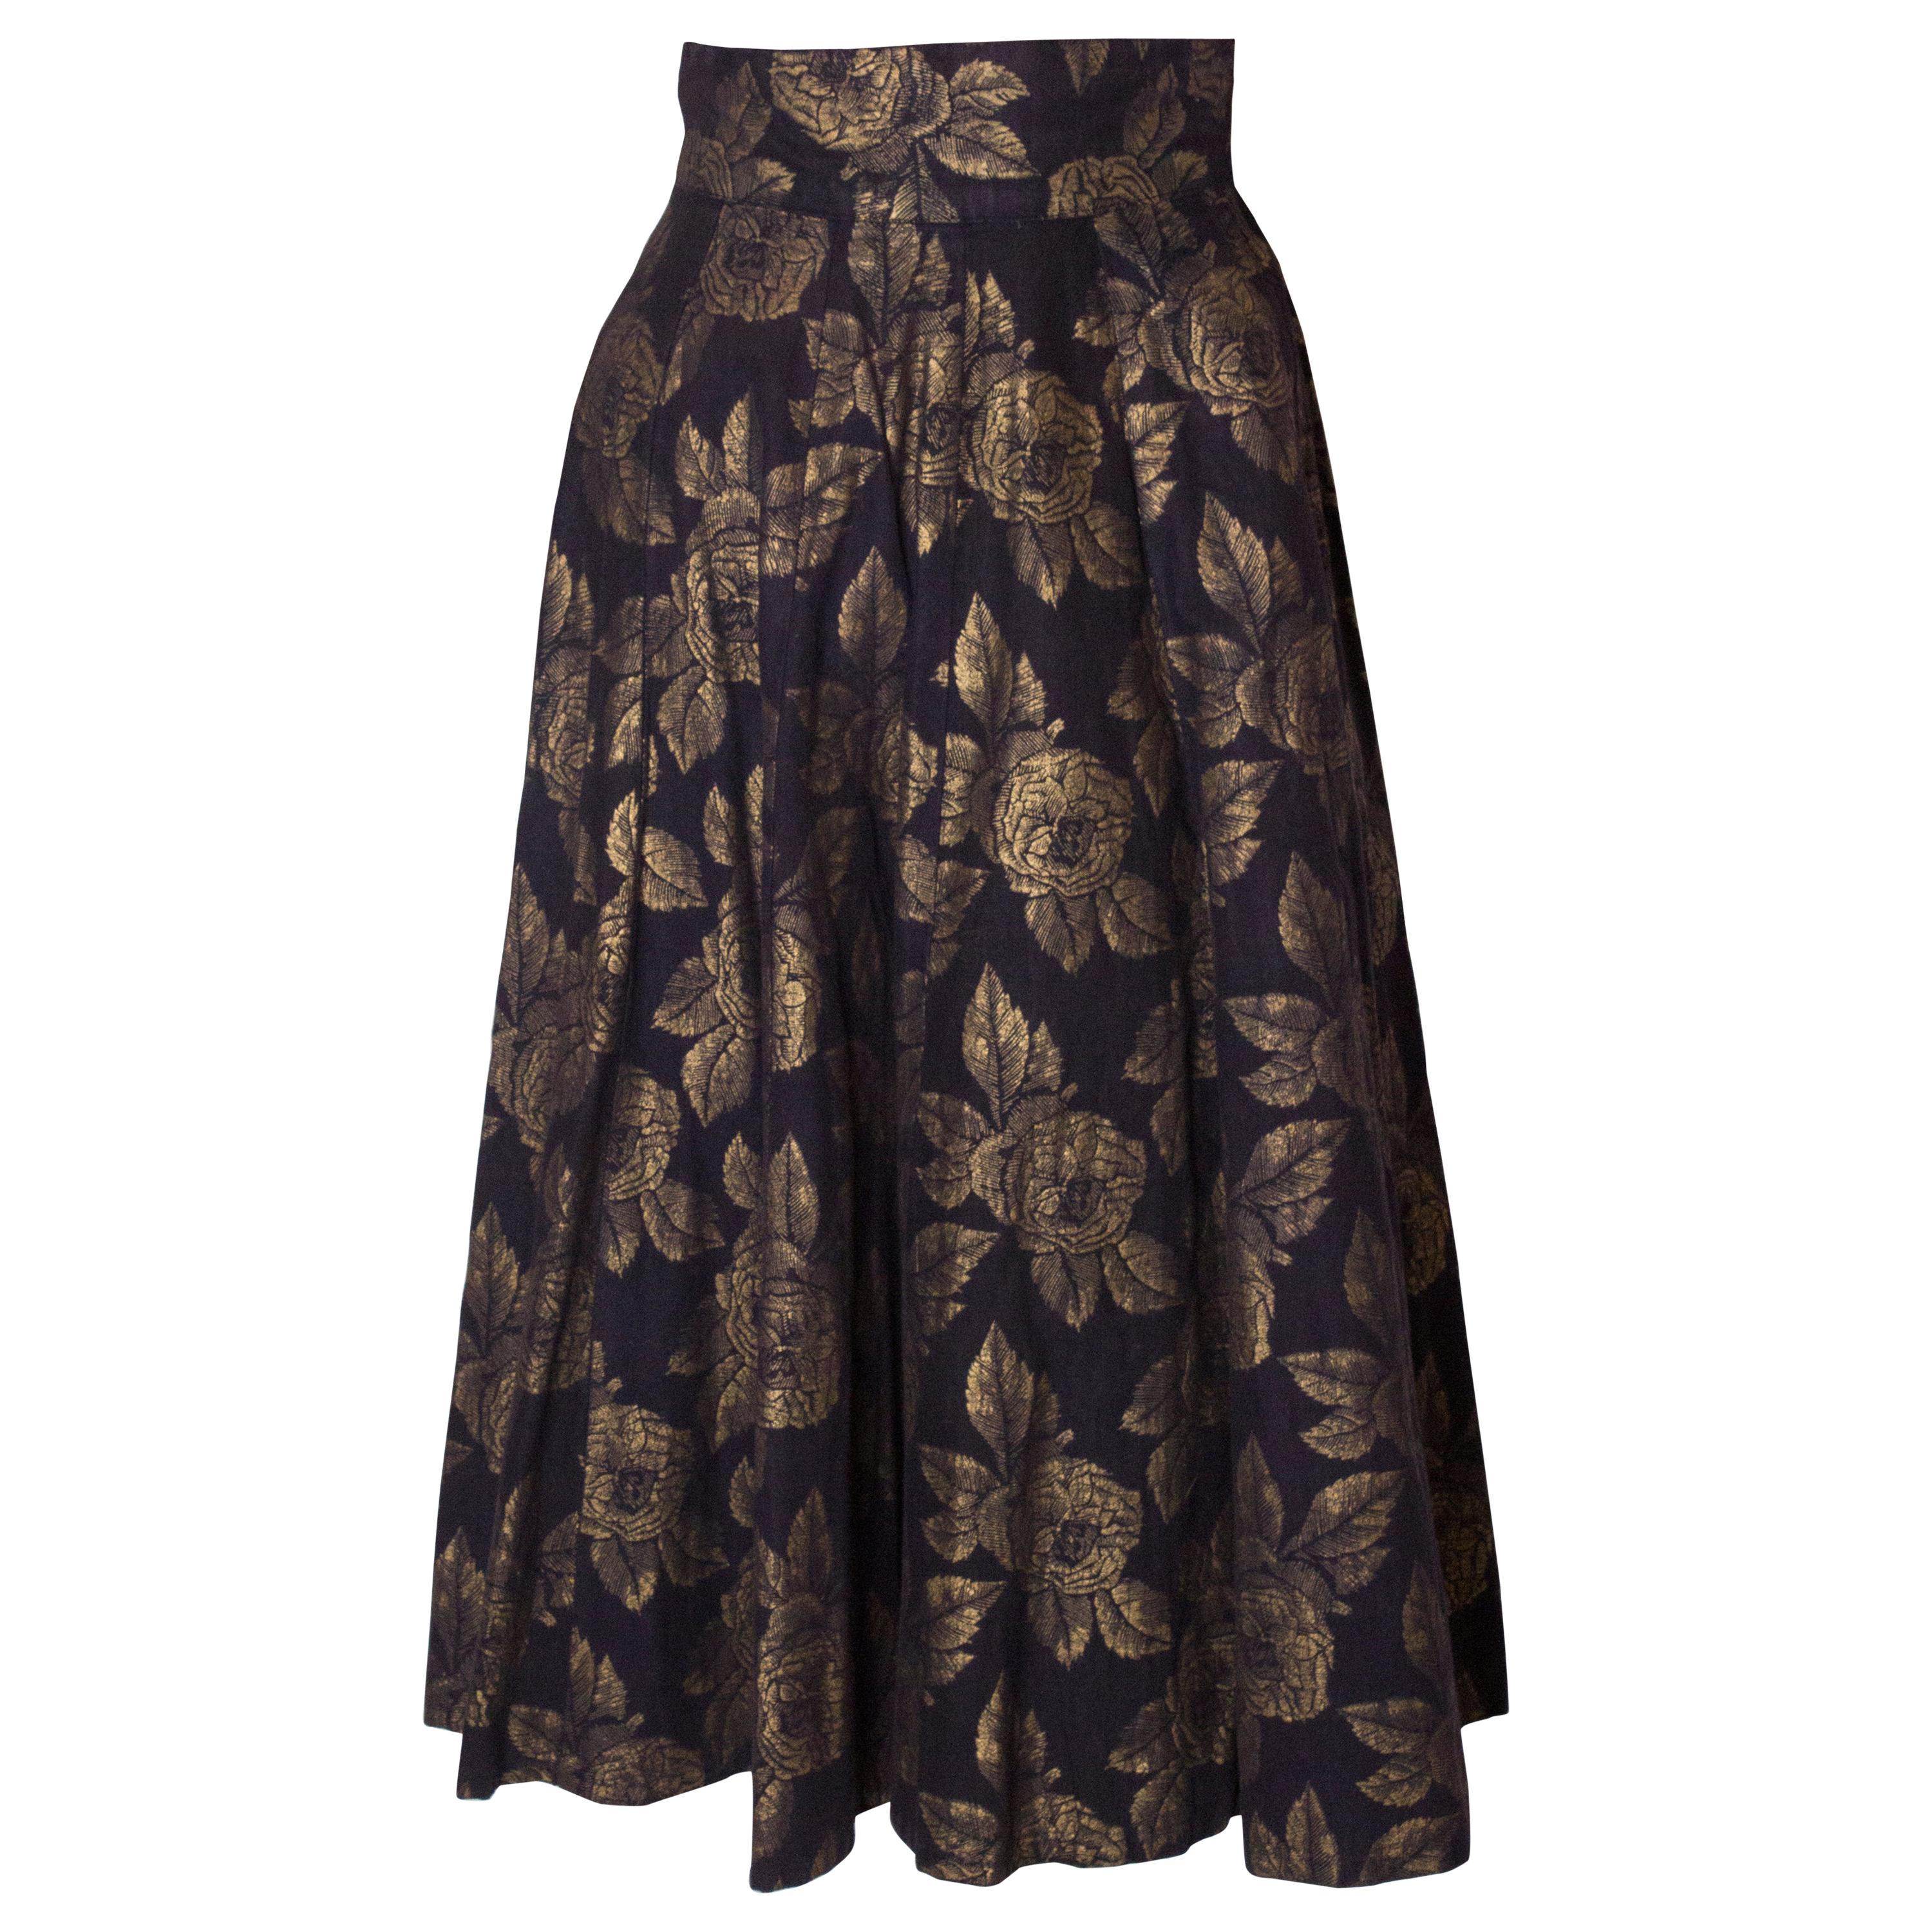 Vintage Black and Gold Skirt with Floral Design For Sale